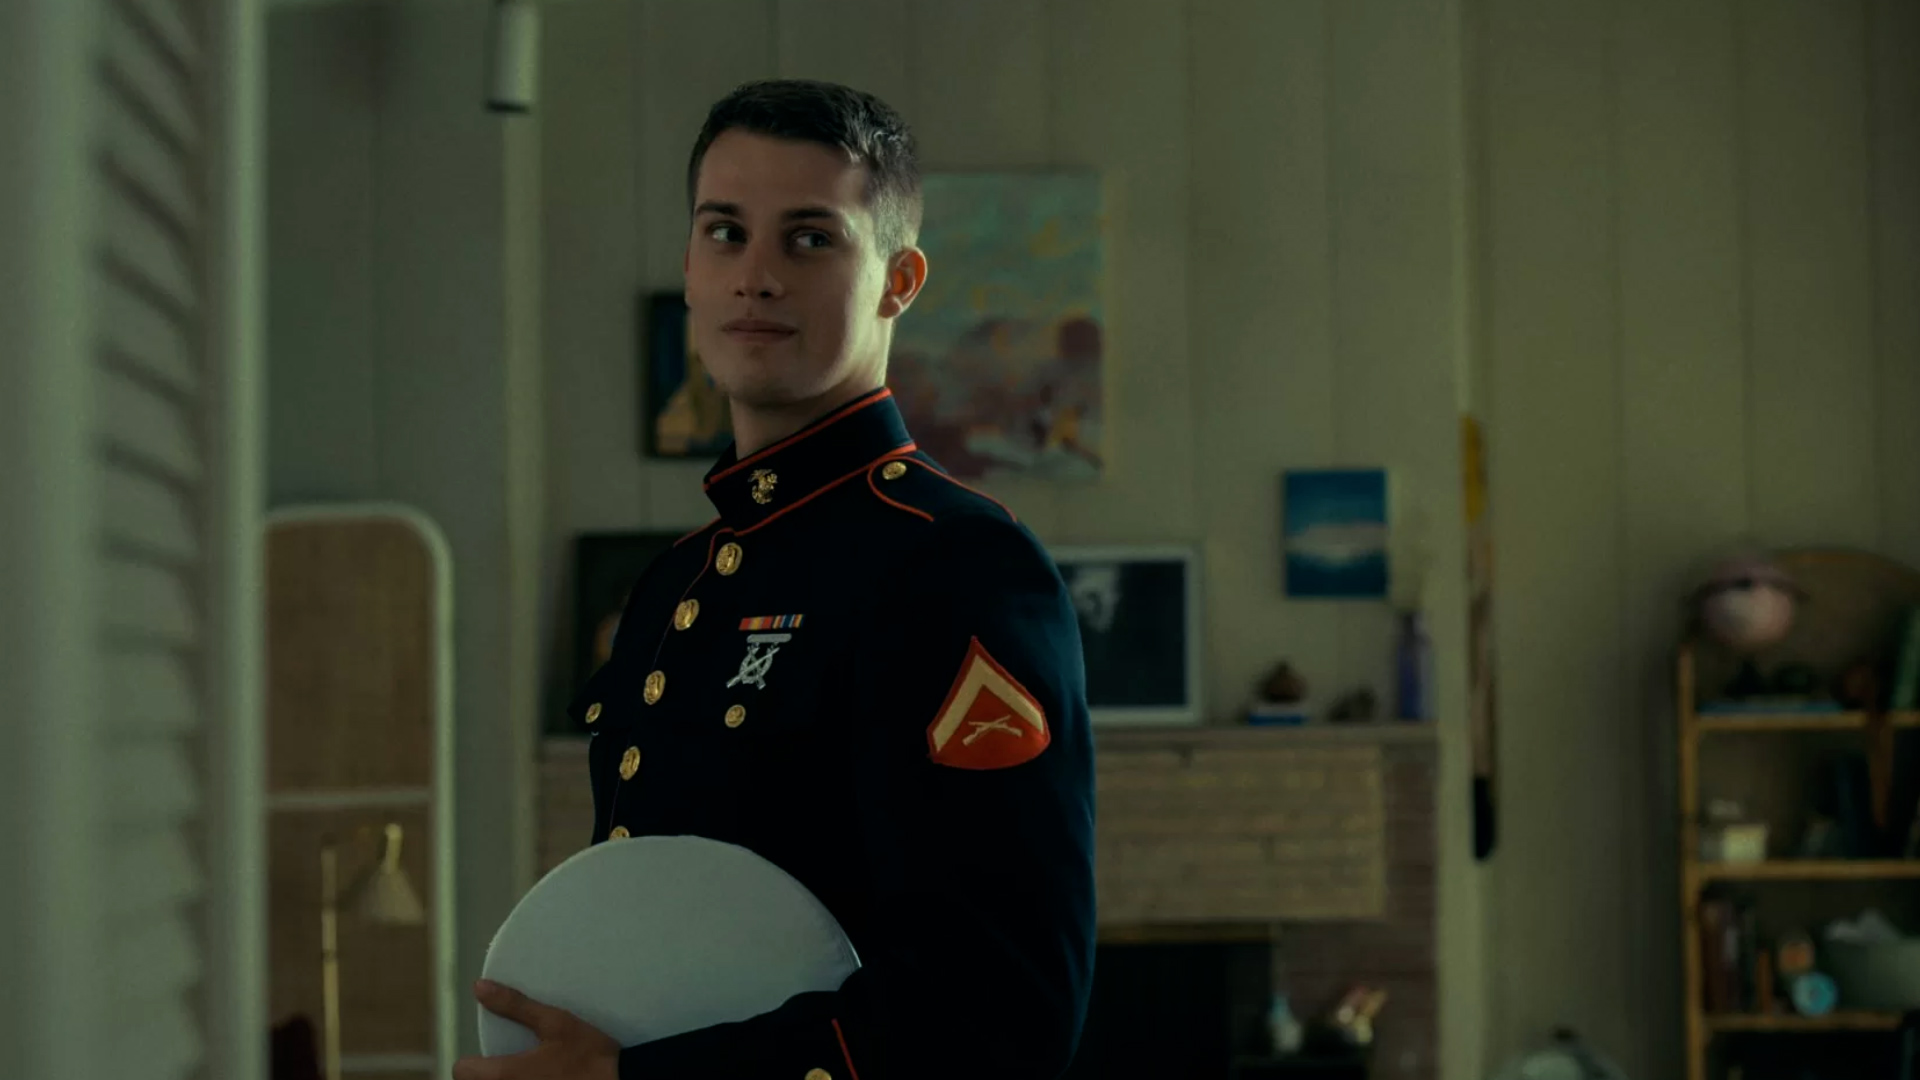 Nicholas Galitzine da vida a Luke, un exdrogadicto convertido en Marine del ejército. (Netflix)